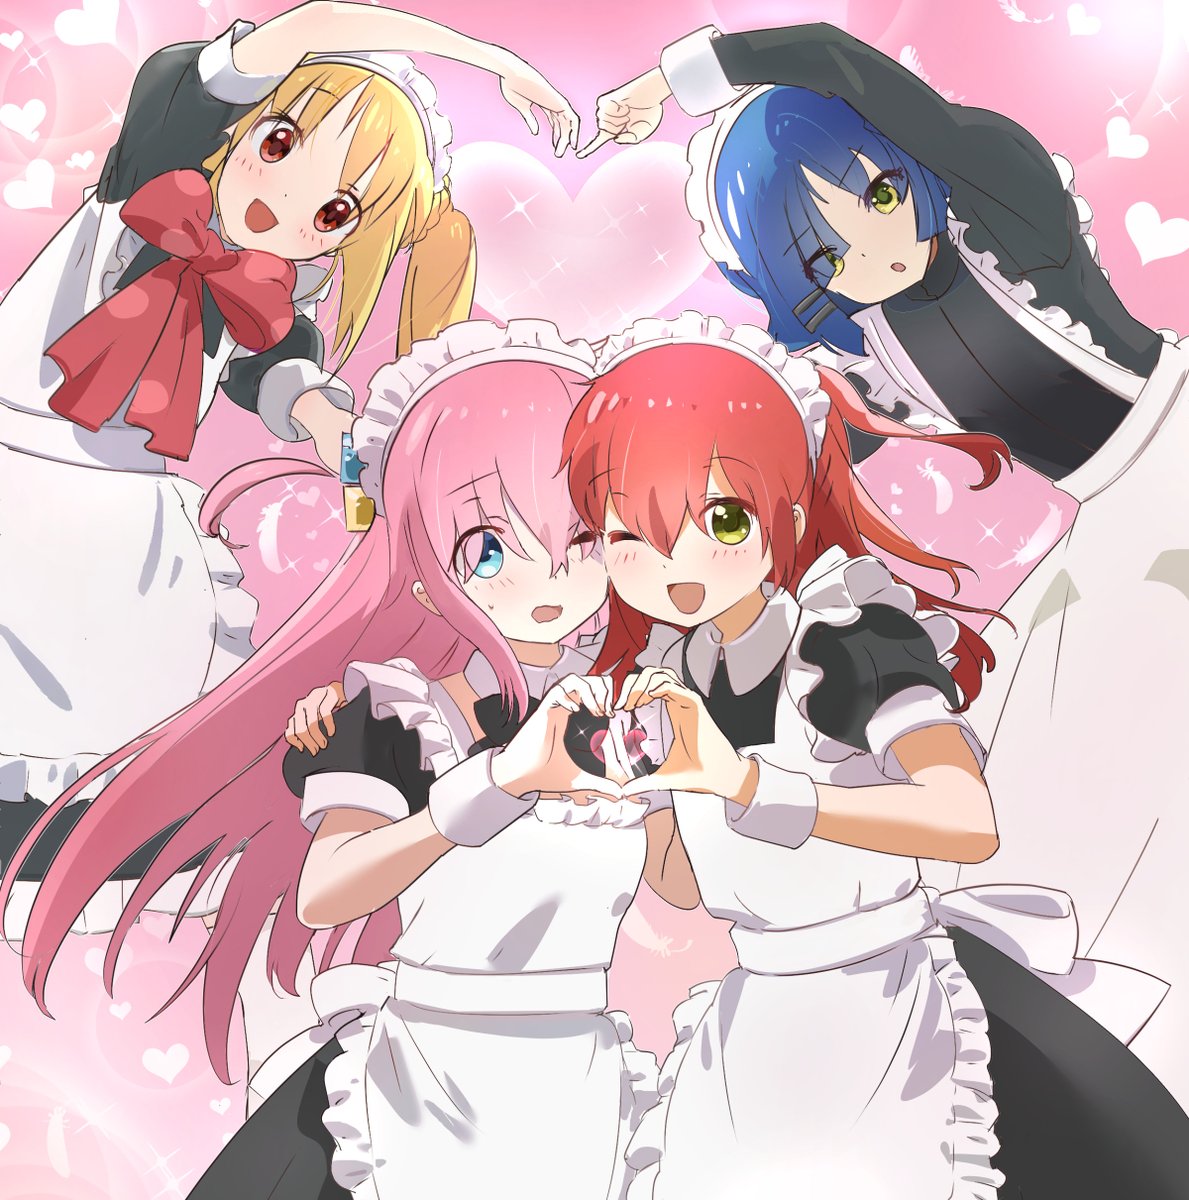 gotou hitori ,ijichi nijika multiple girls heart hands 4girls heart hands duo maid headdress heart maid  illustration images